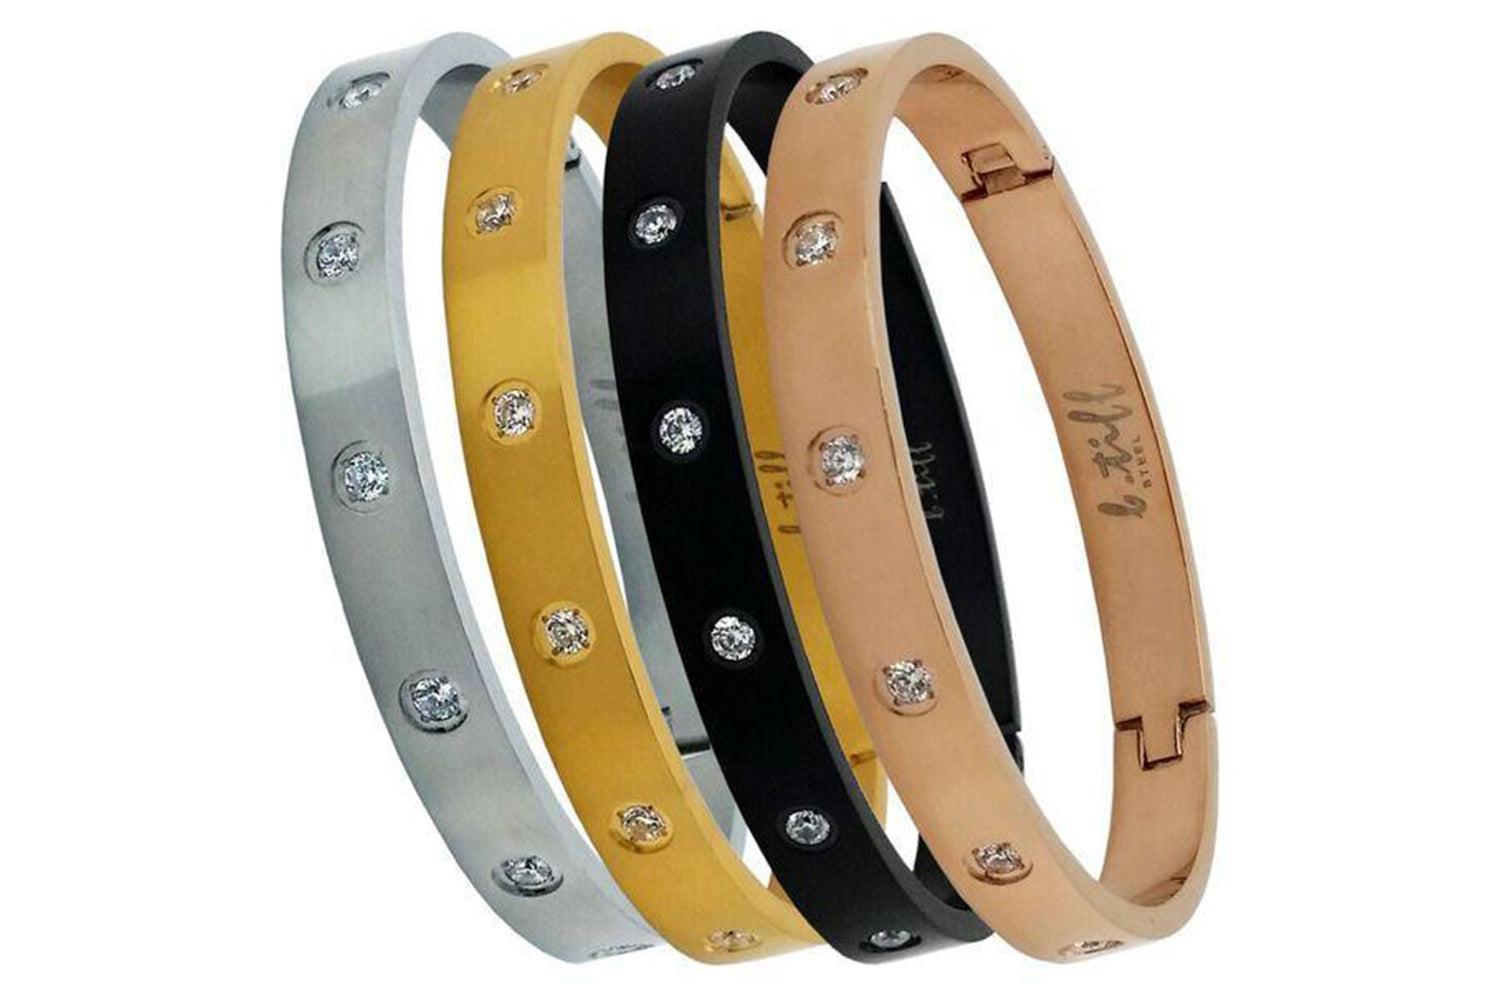 Premium Holographic Blue VIP Plastic Secure Snap Wristbands 100 Count 5/8